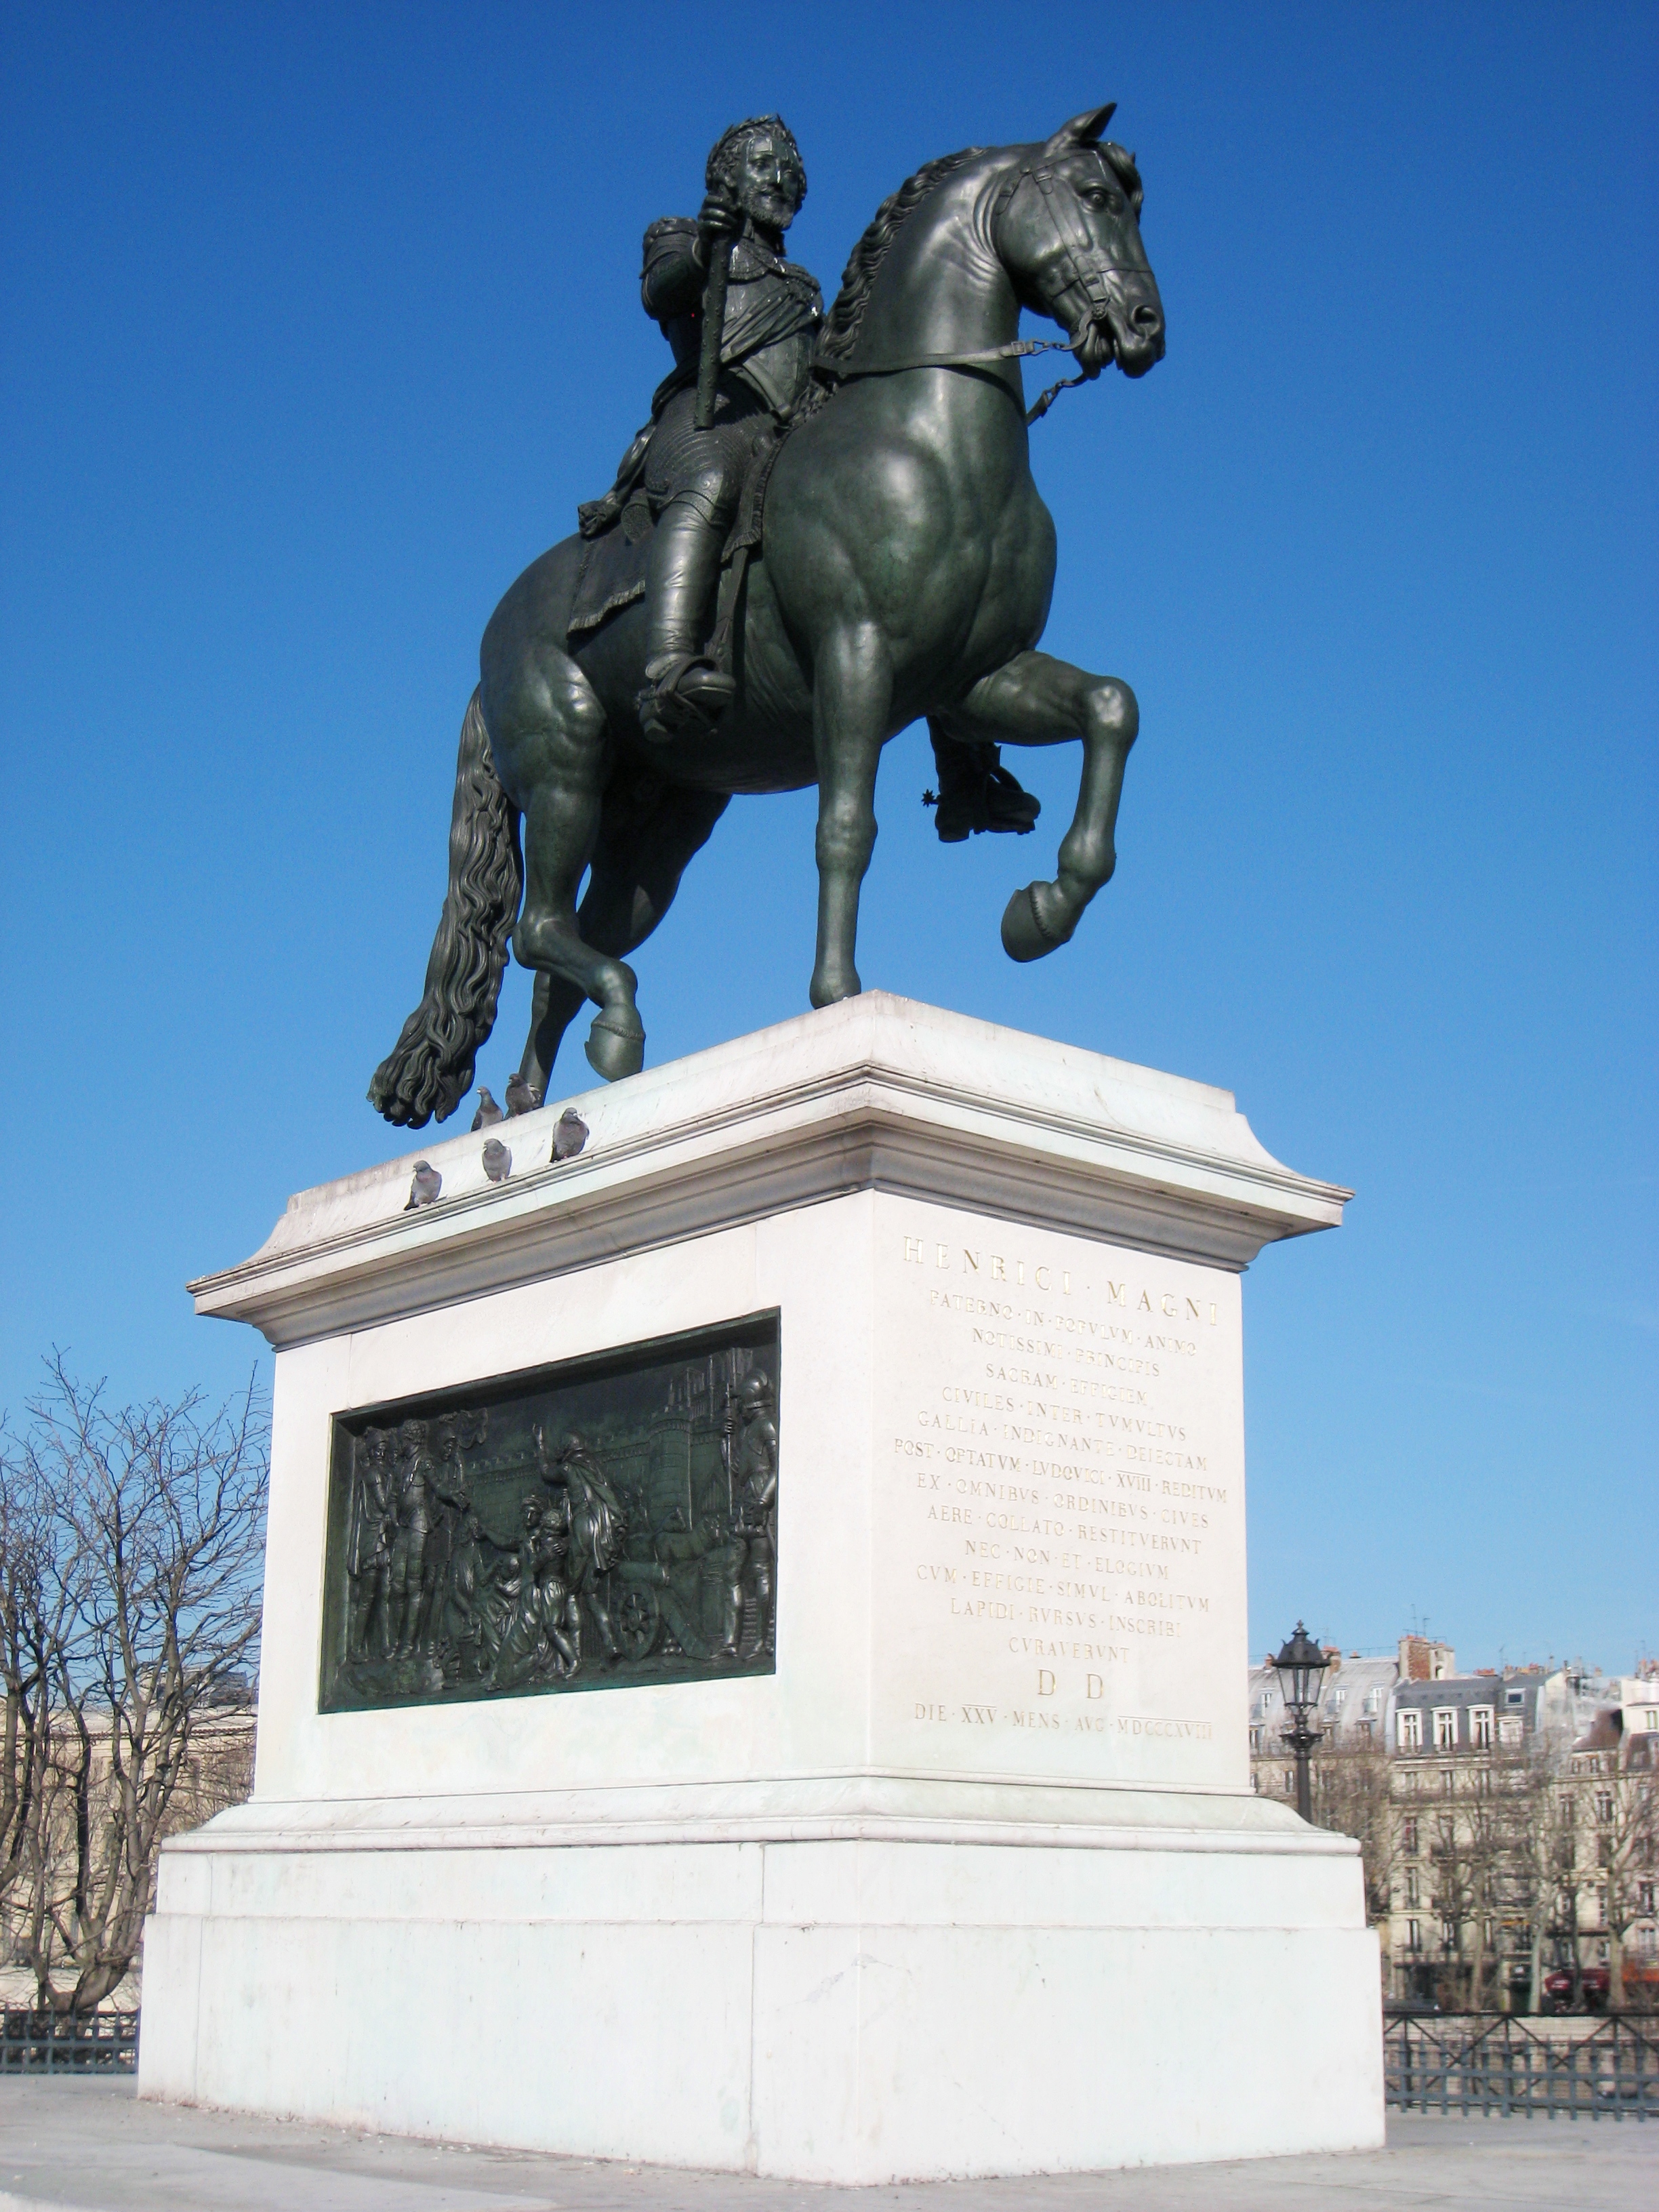 File:Statue of Henri IV - Pont Neuf, Paris, France.JPG - Wikipedia